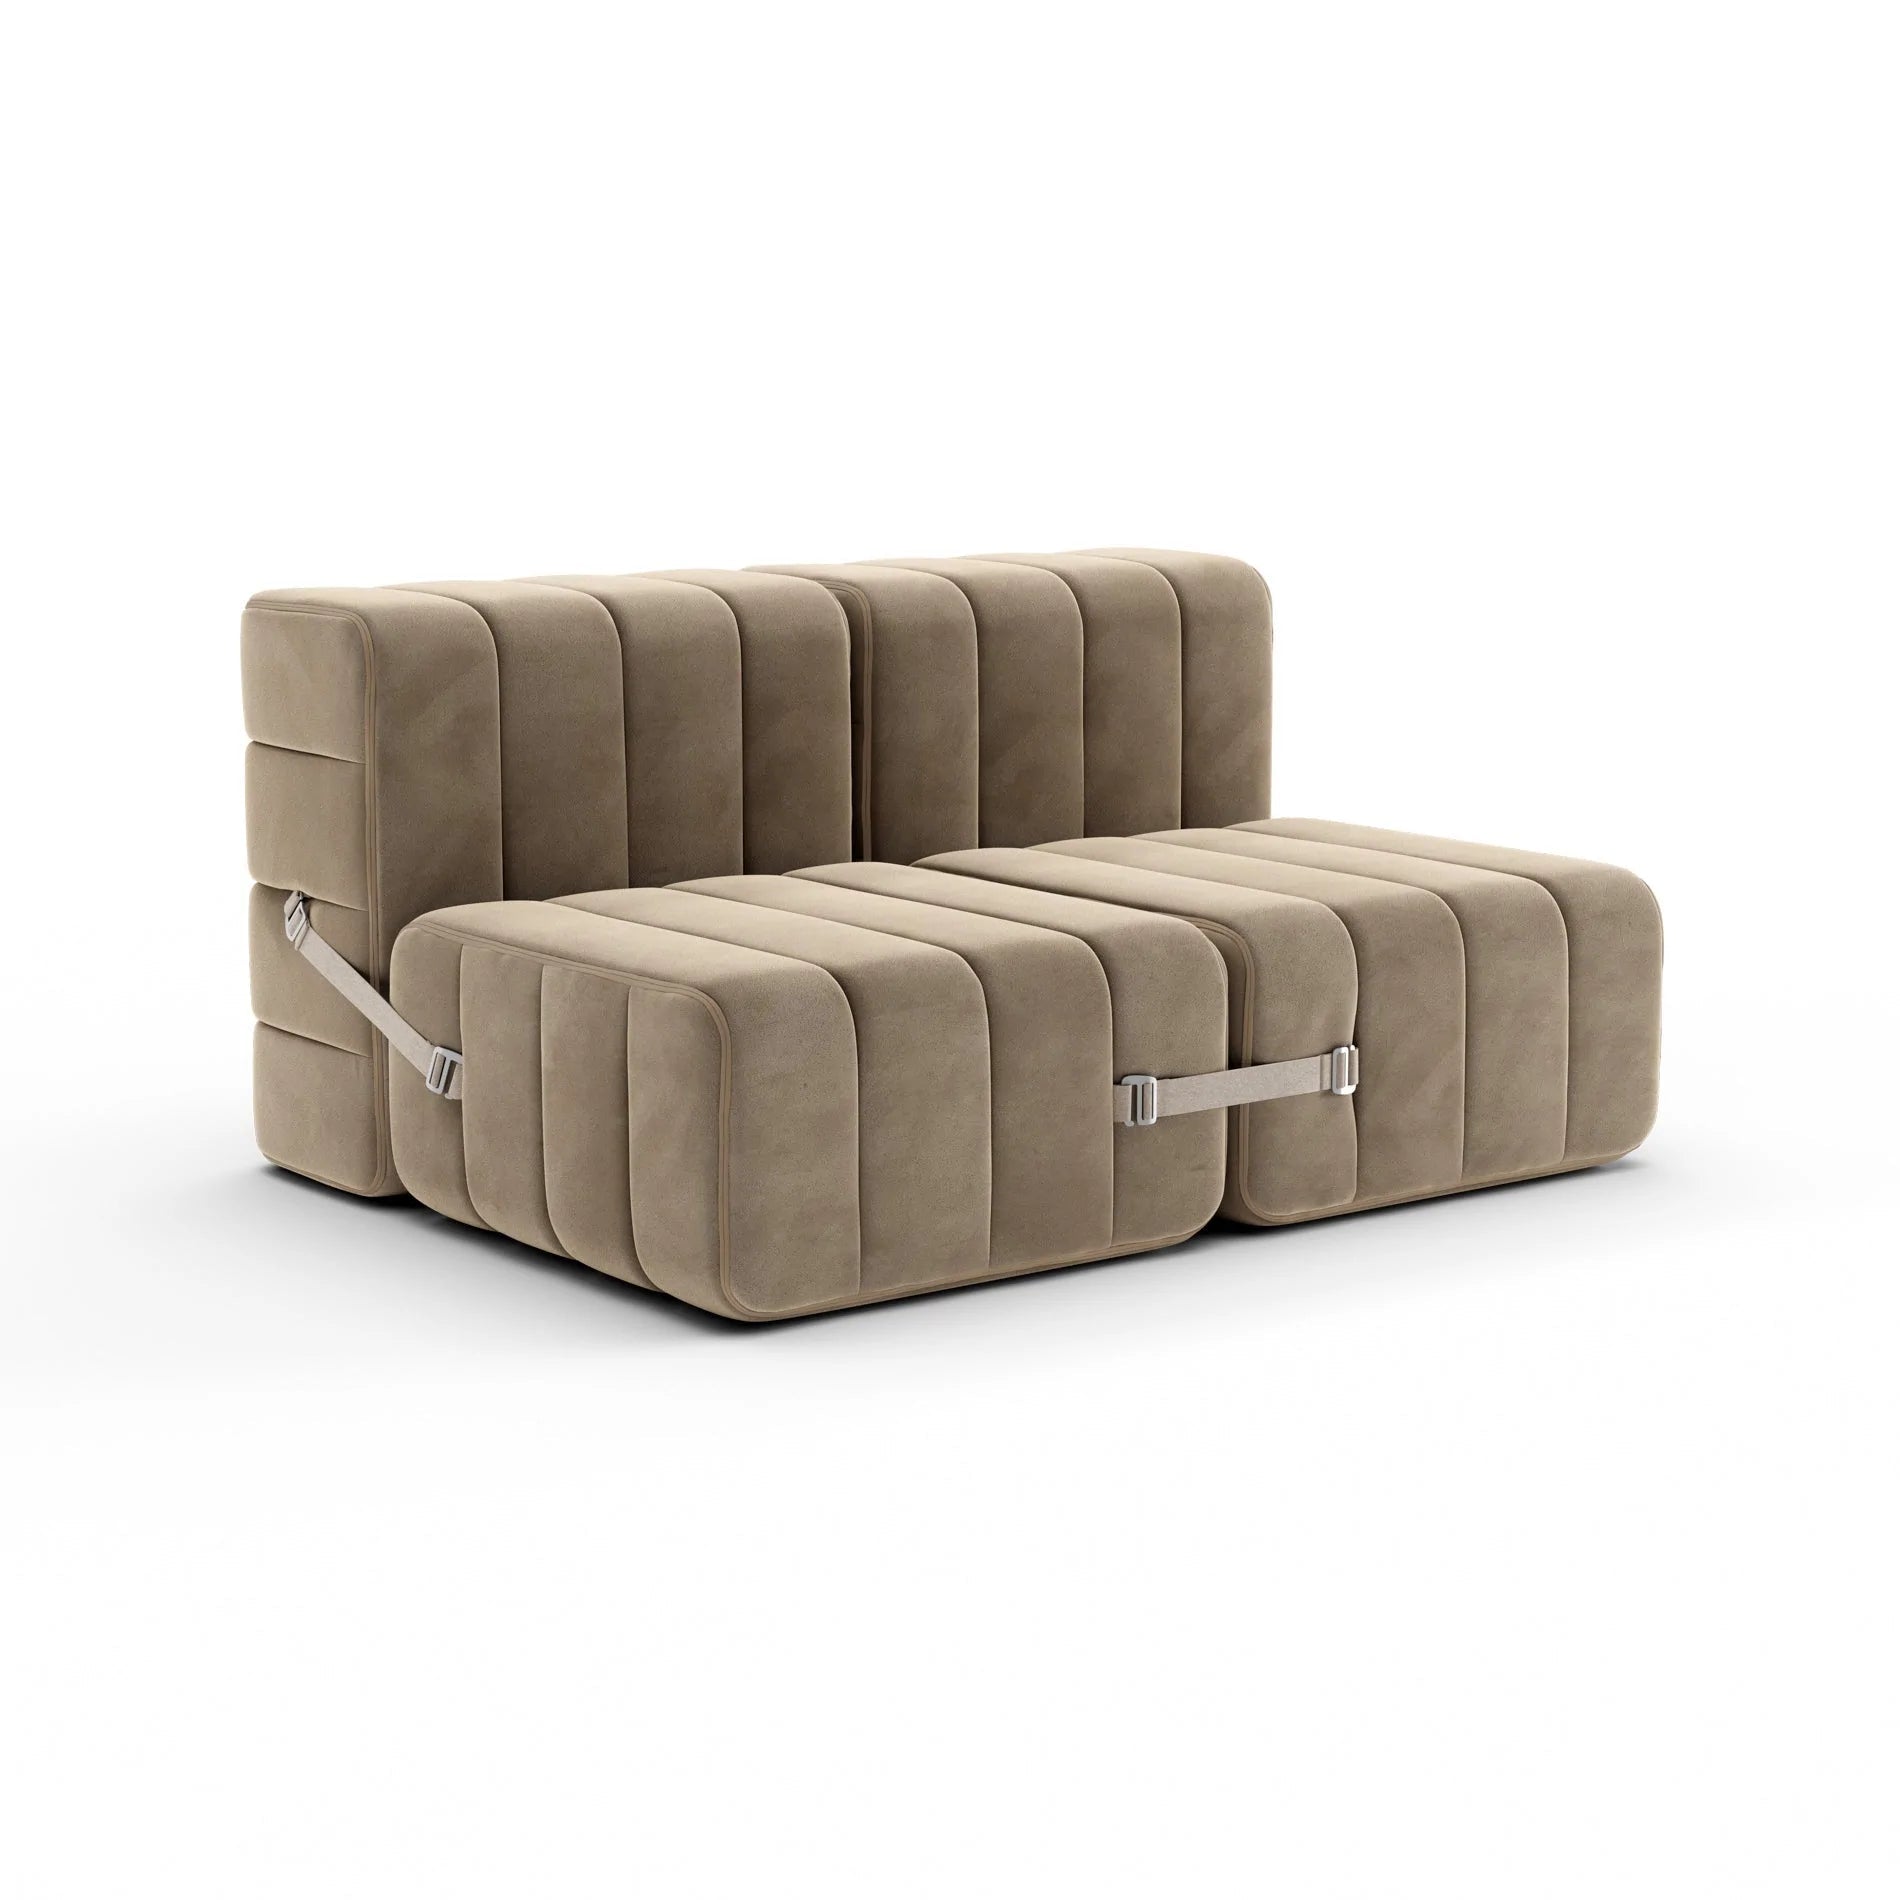 Curt modular sofa system - Barcelona Vole sofas from Ambivalenz